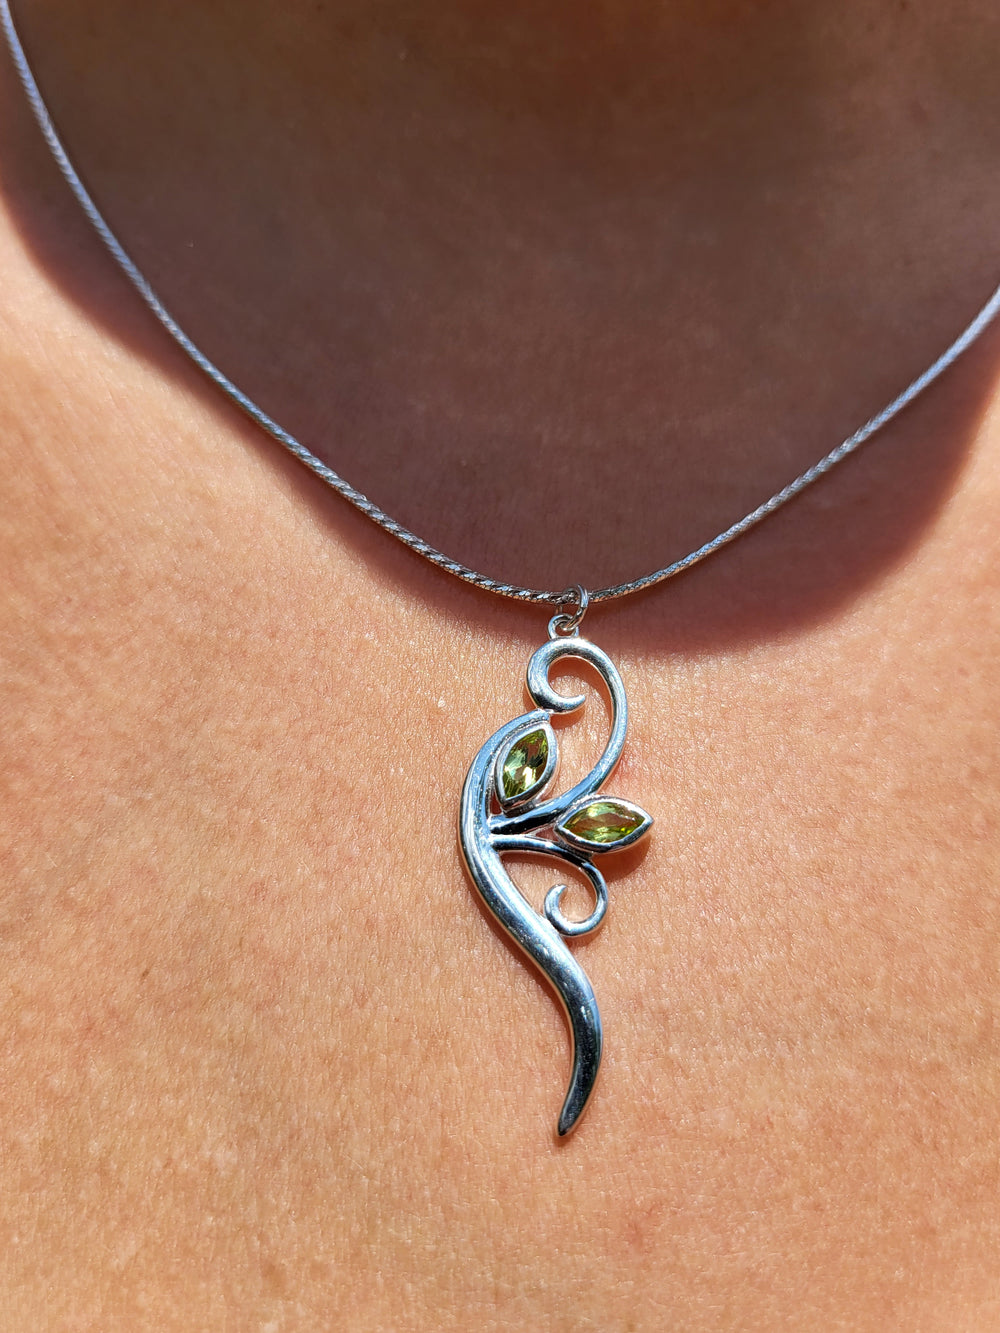 Peridot pendant on a sterling silver box chain.